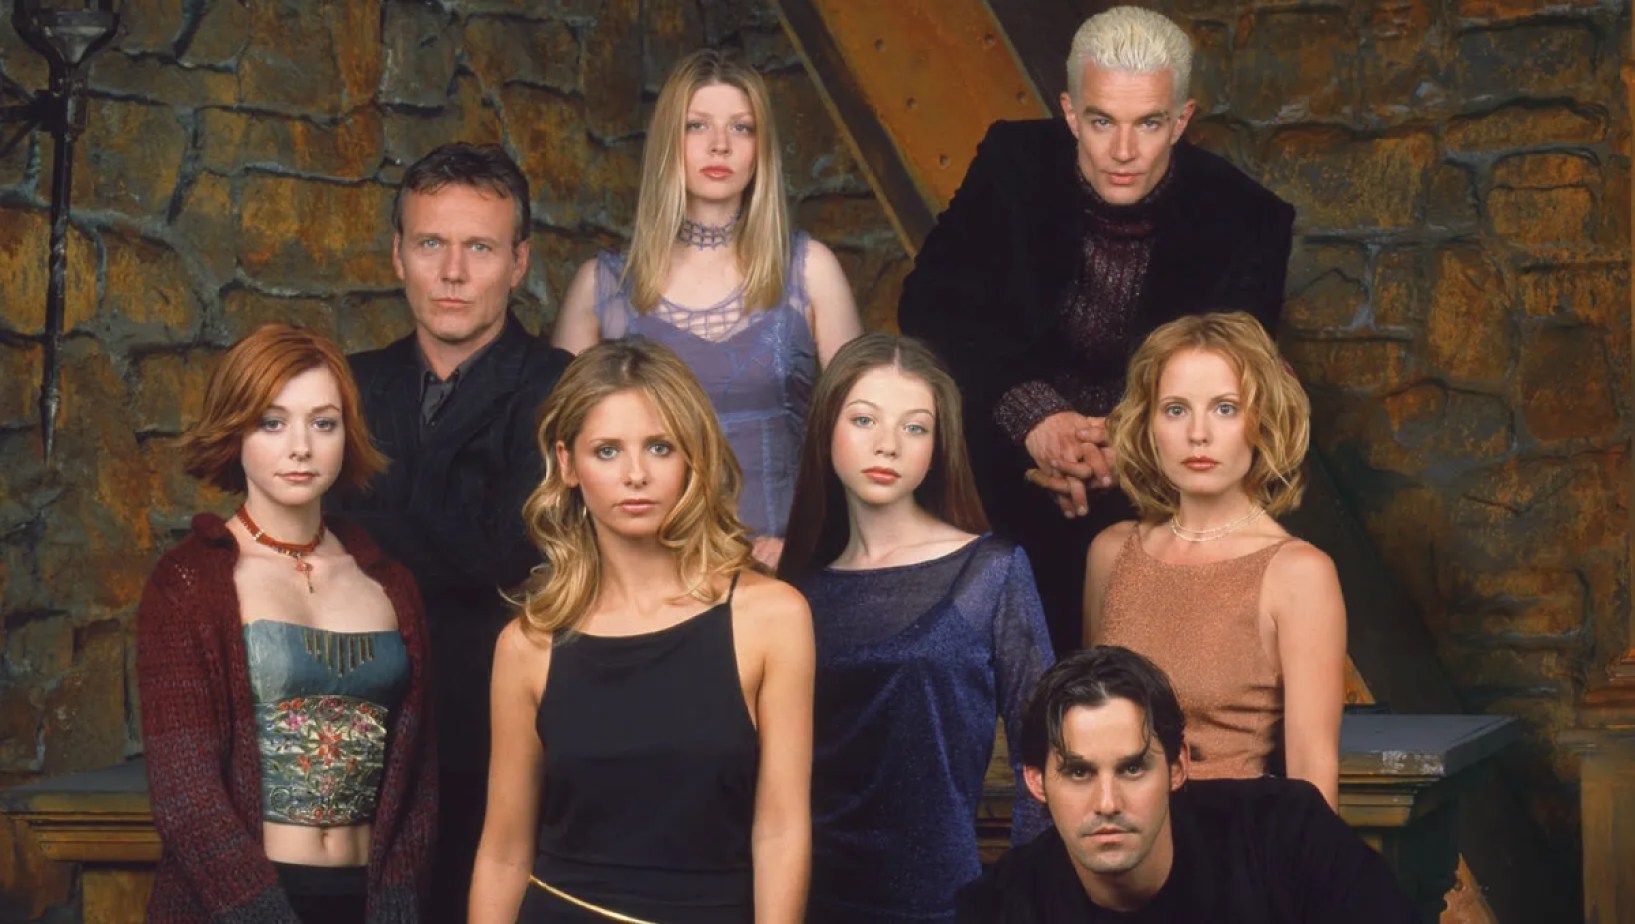 Buffy cast photo